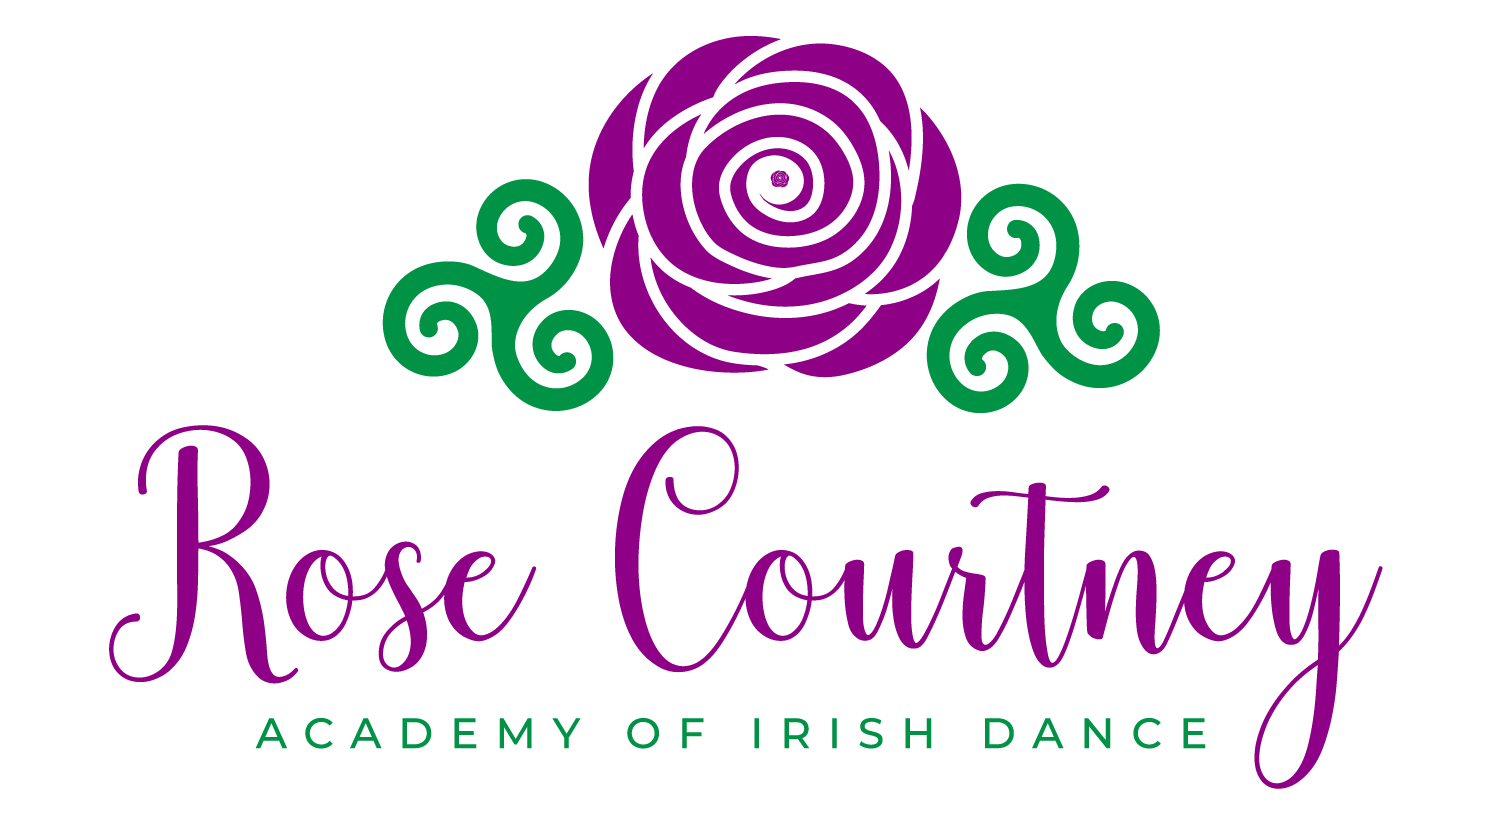 Rose Courtney Academy of Irish Dance